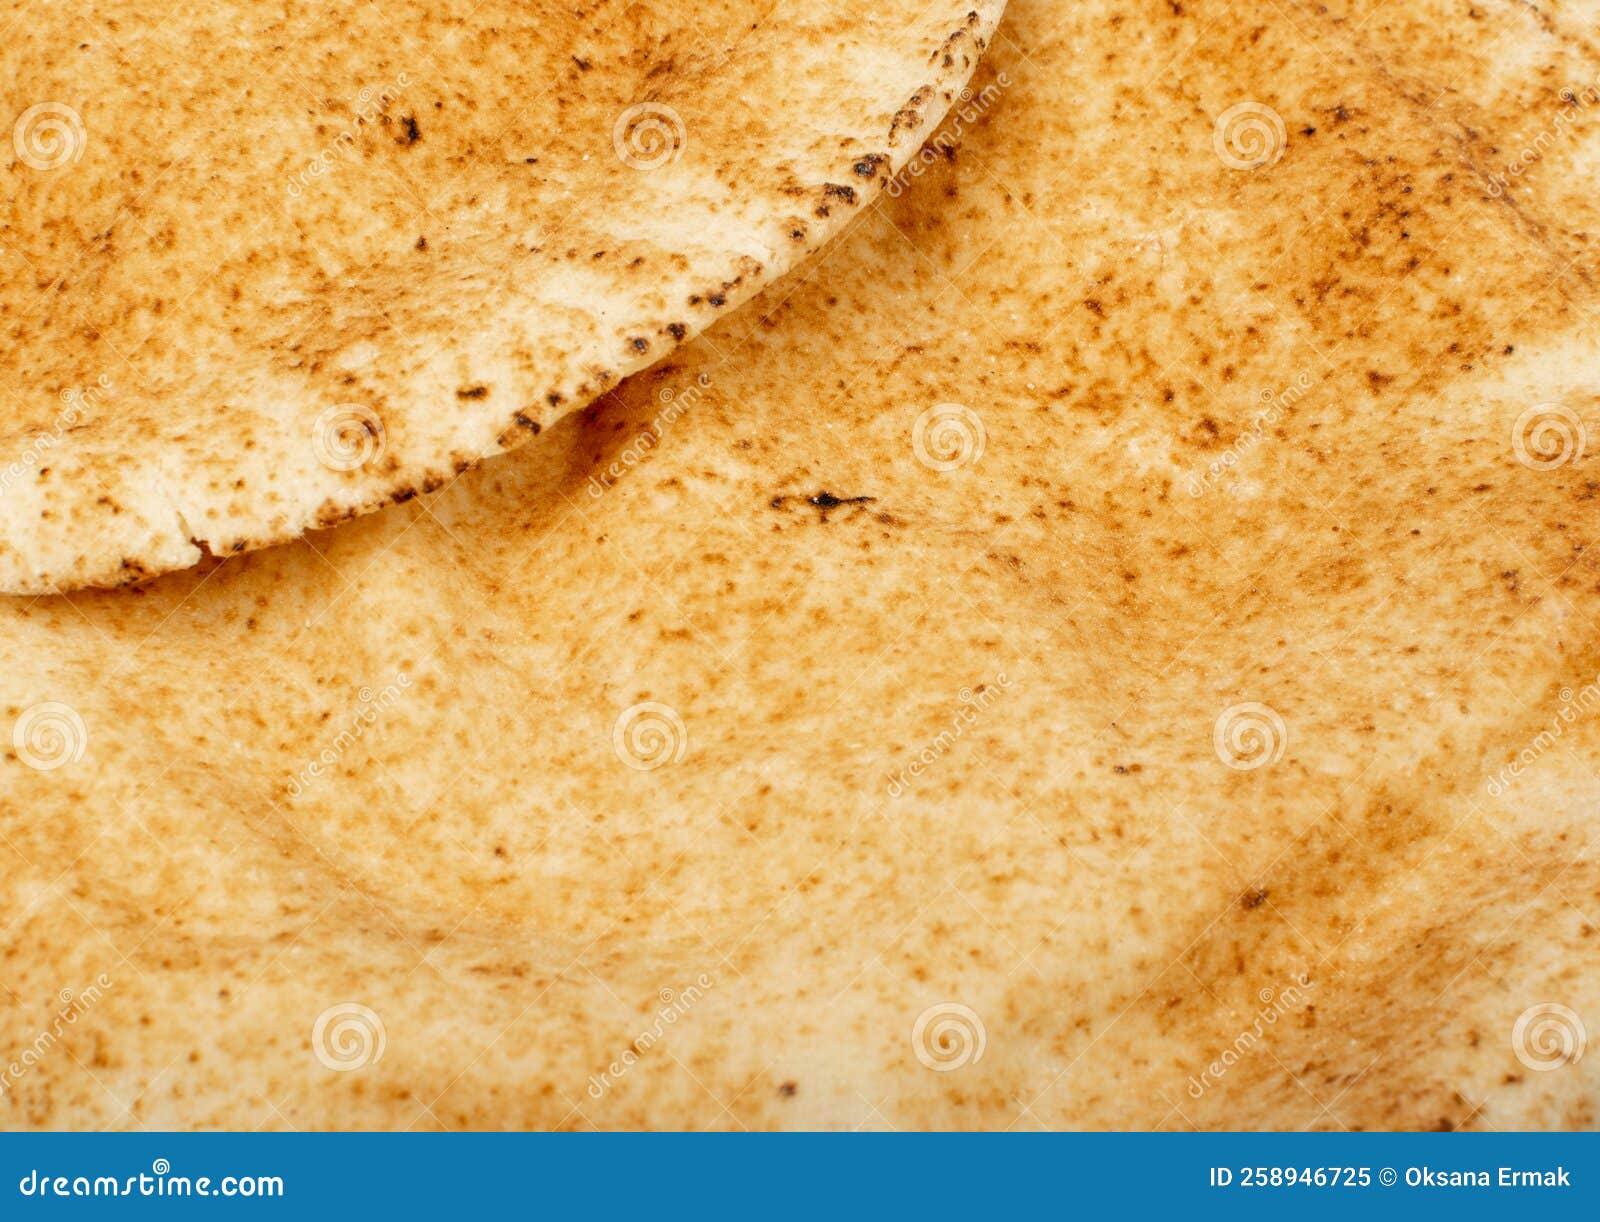 Indian Chapati Bread. Image & Photo (Free Trial) | Bigstock